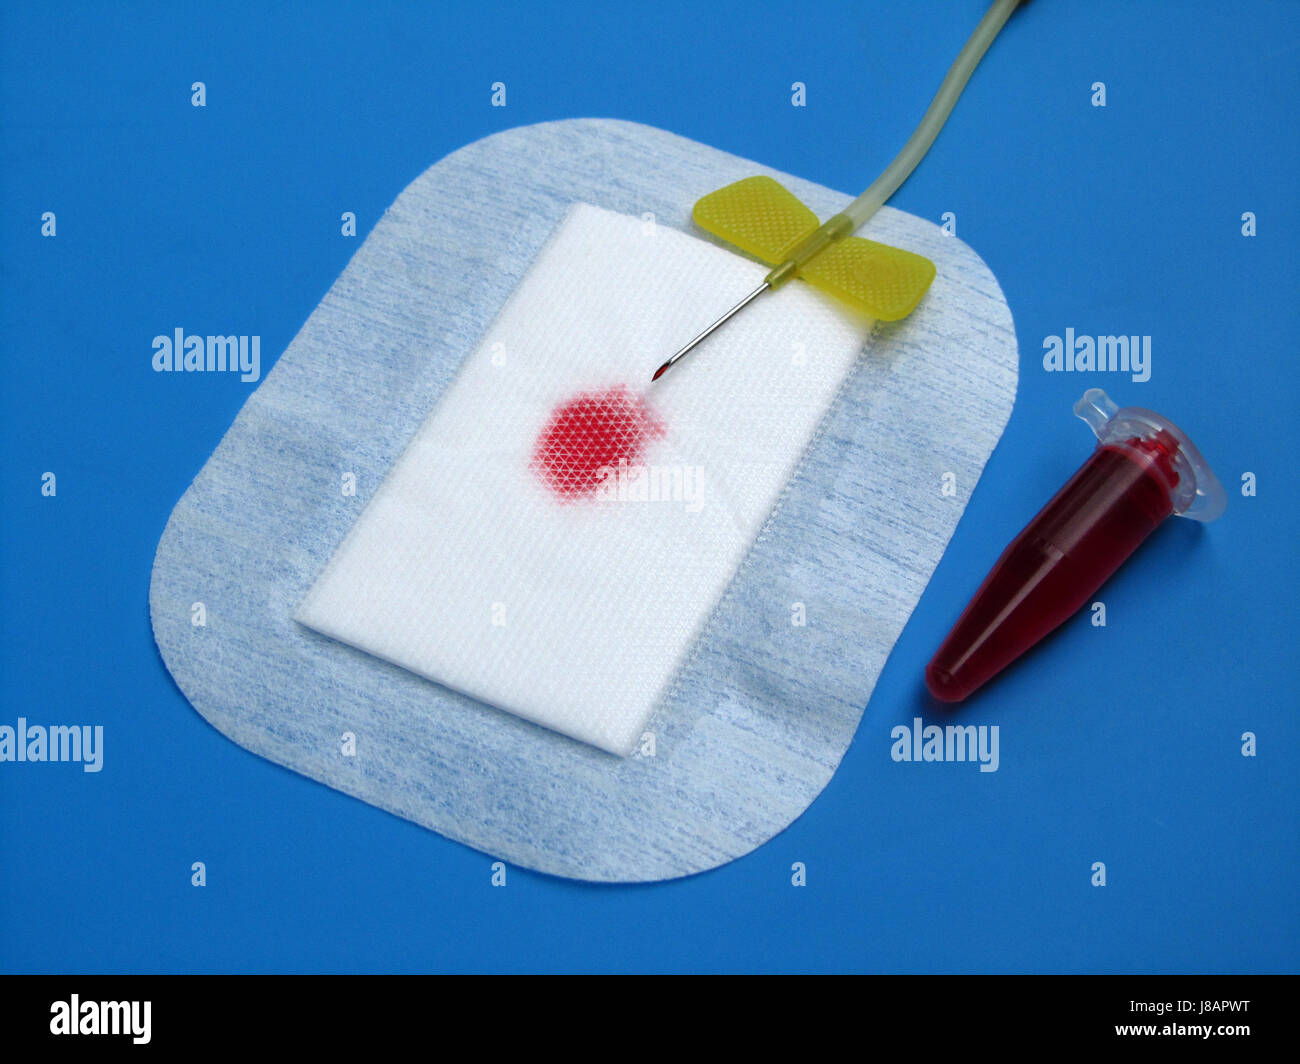 blood test Stock Photo